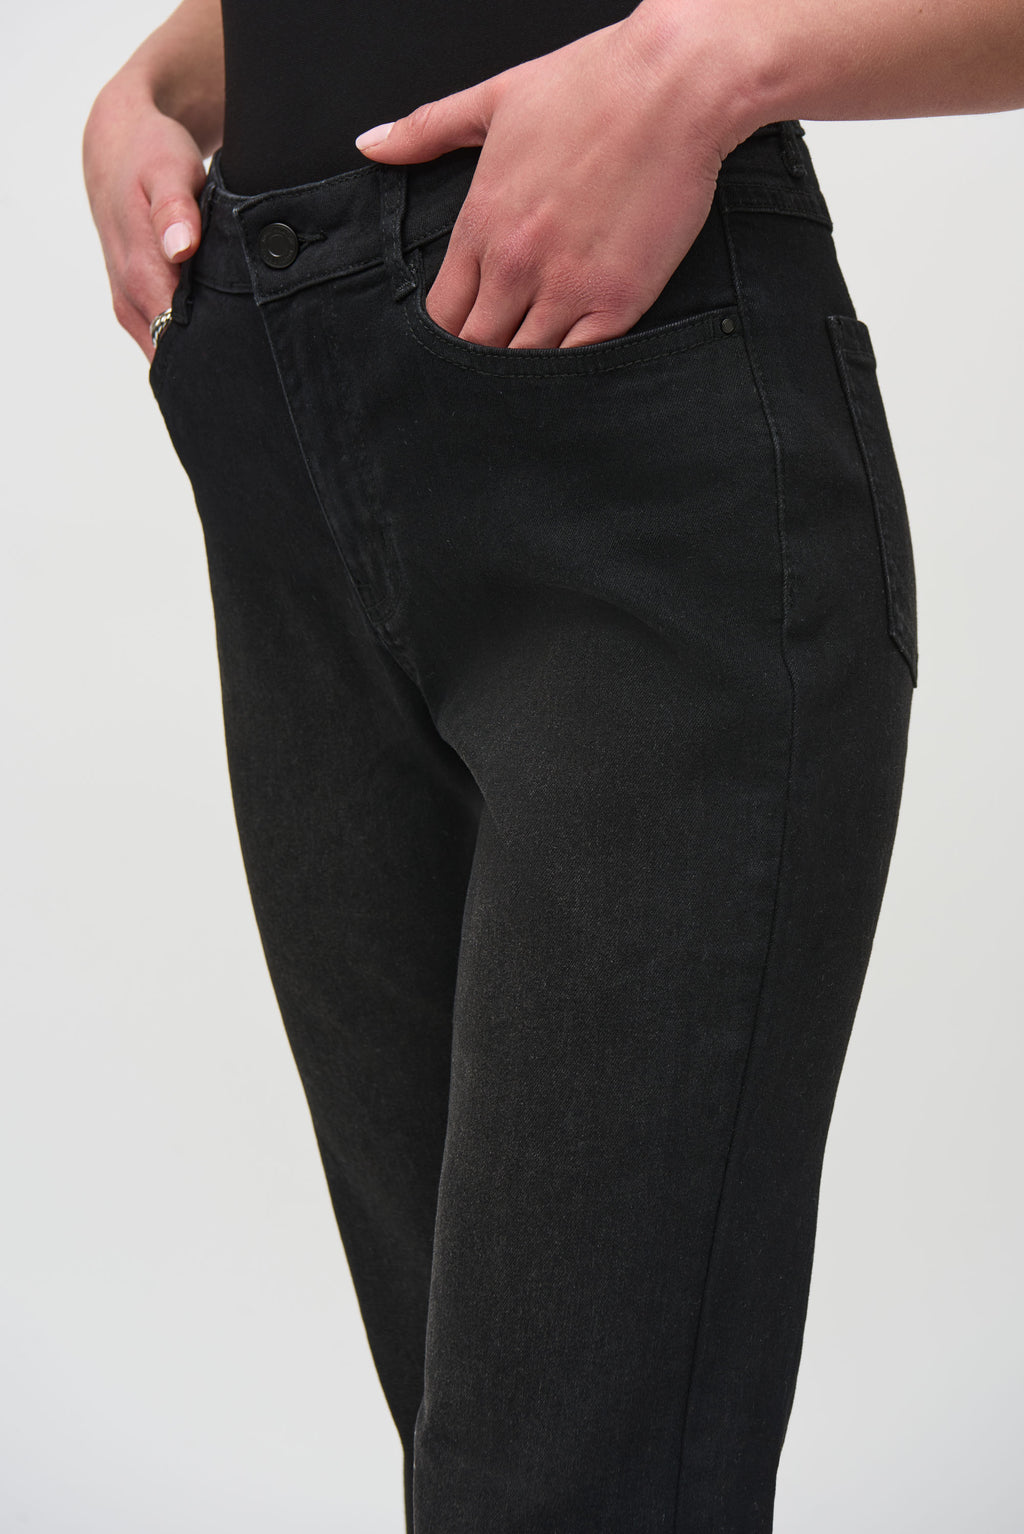 Joseph Ribkoff Classic Flared Black Denim Pants with Rhinestone Detail Style 244949